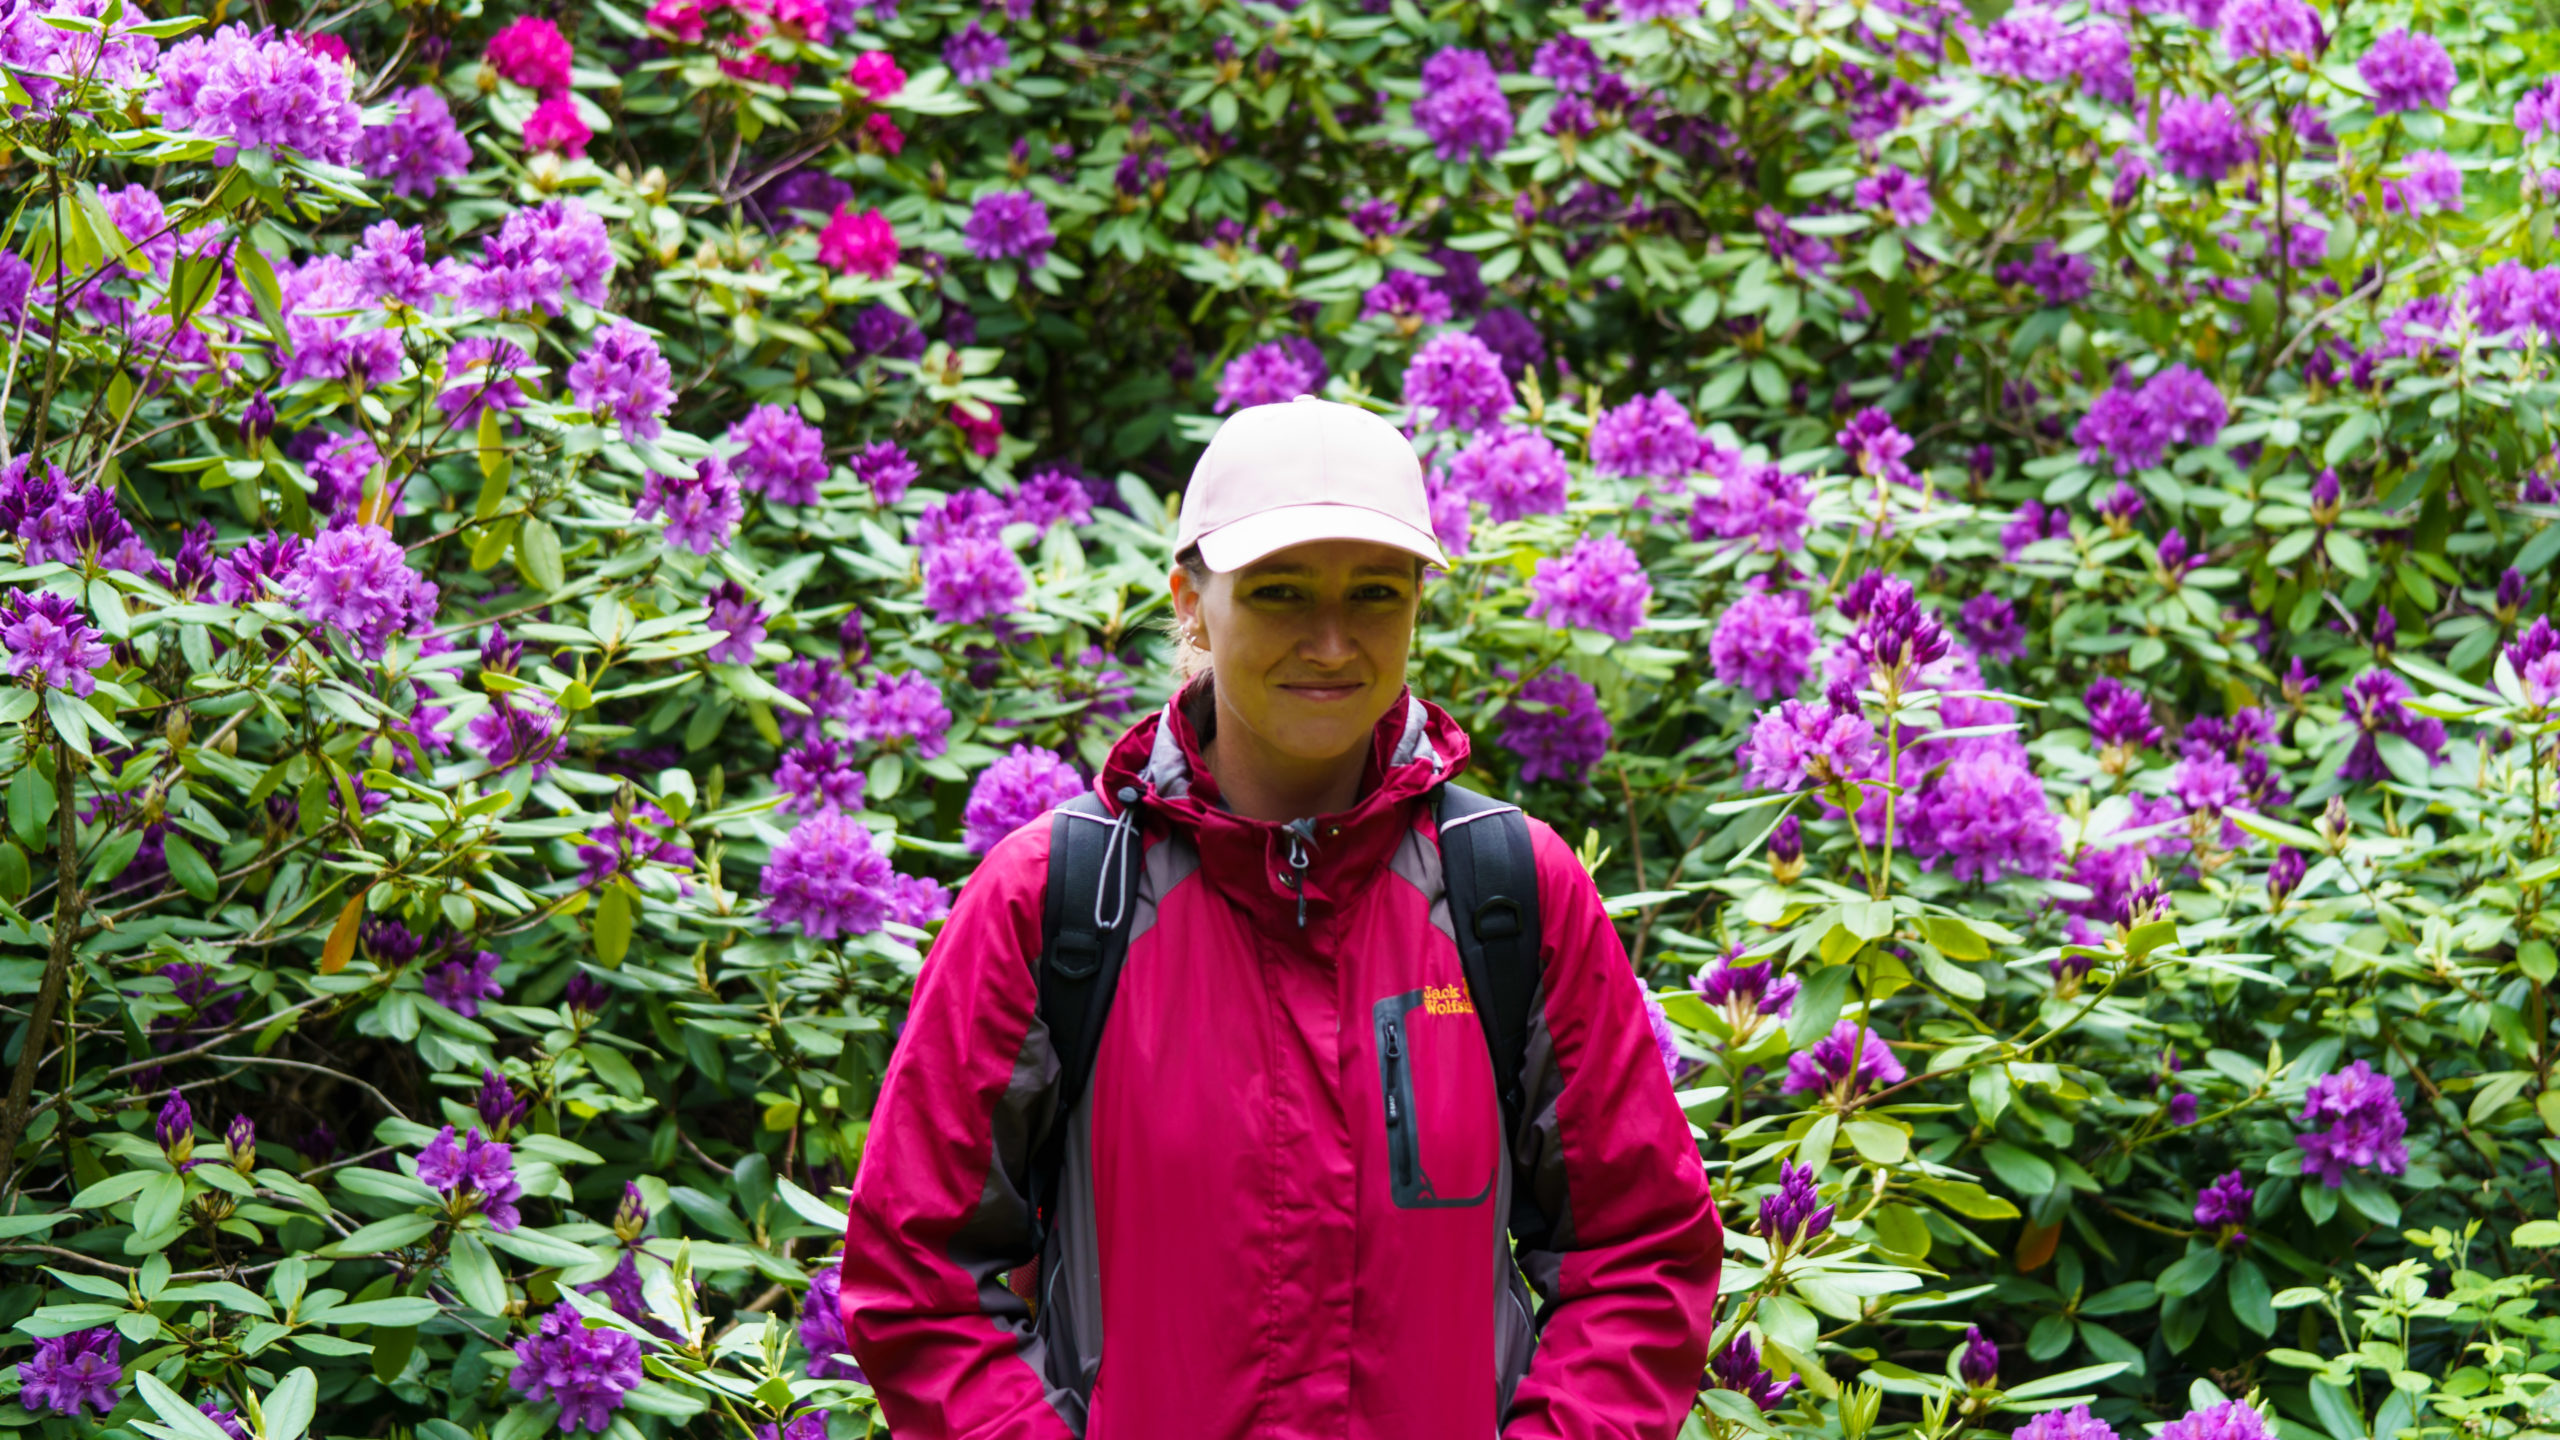 Grenzweg Gerstunger Forst, Rhododendron-Pflanze an der Erbbegräbnis-Stätte nahe Grenzweg